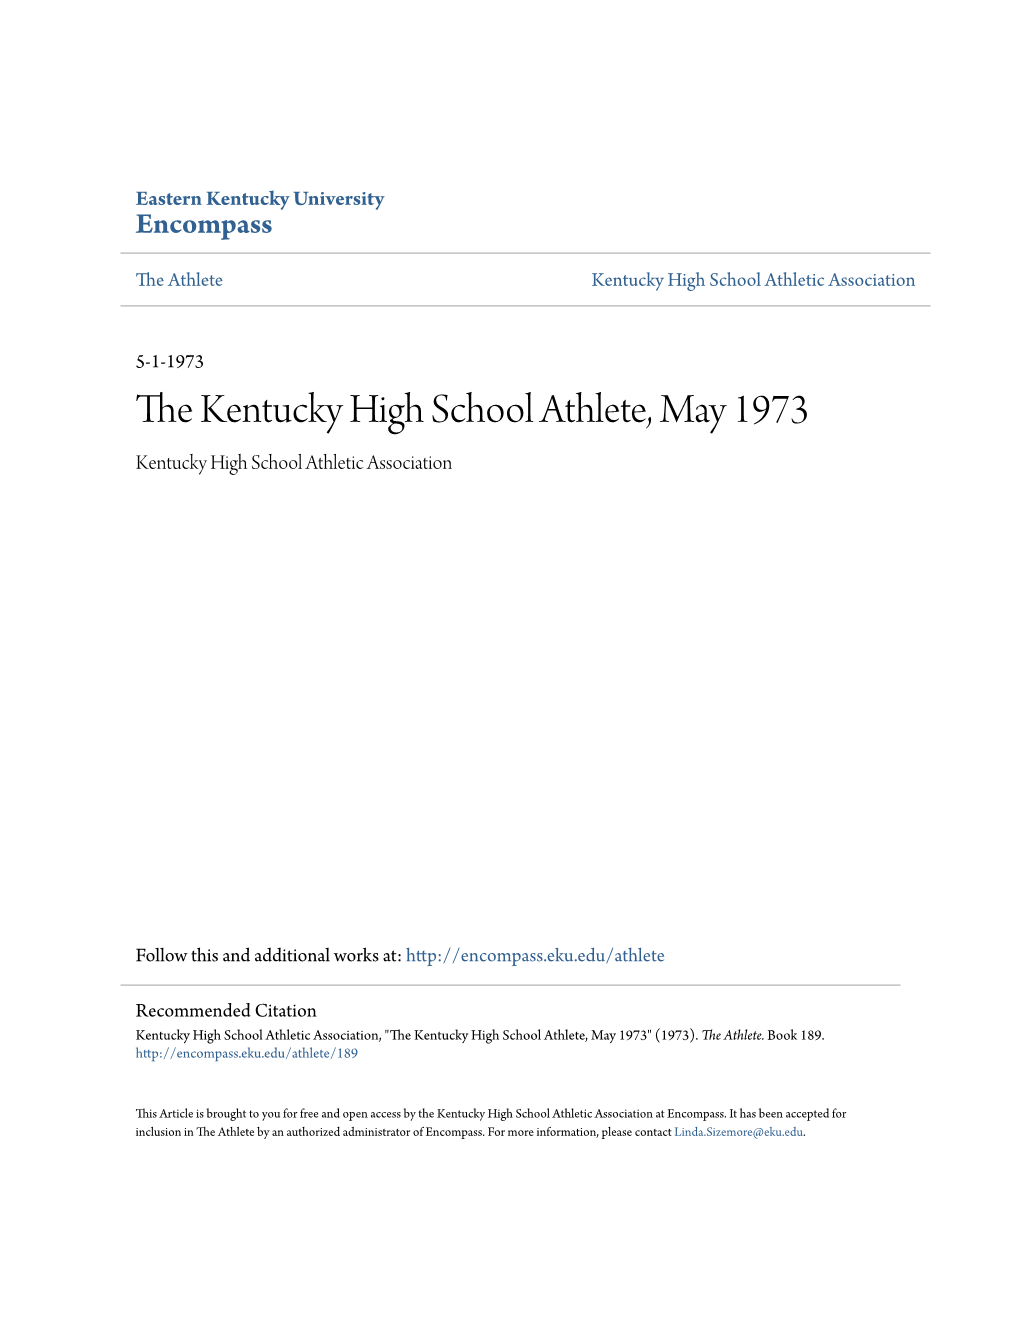 The Kentucky High School Athlete, May 1973 Kentucky High School Athletic Association